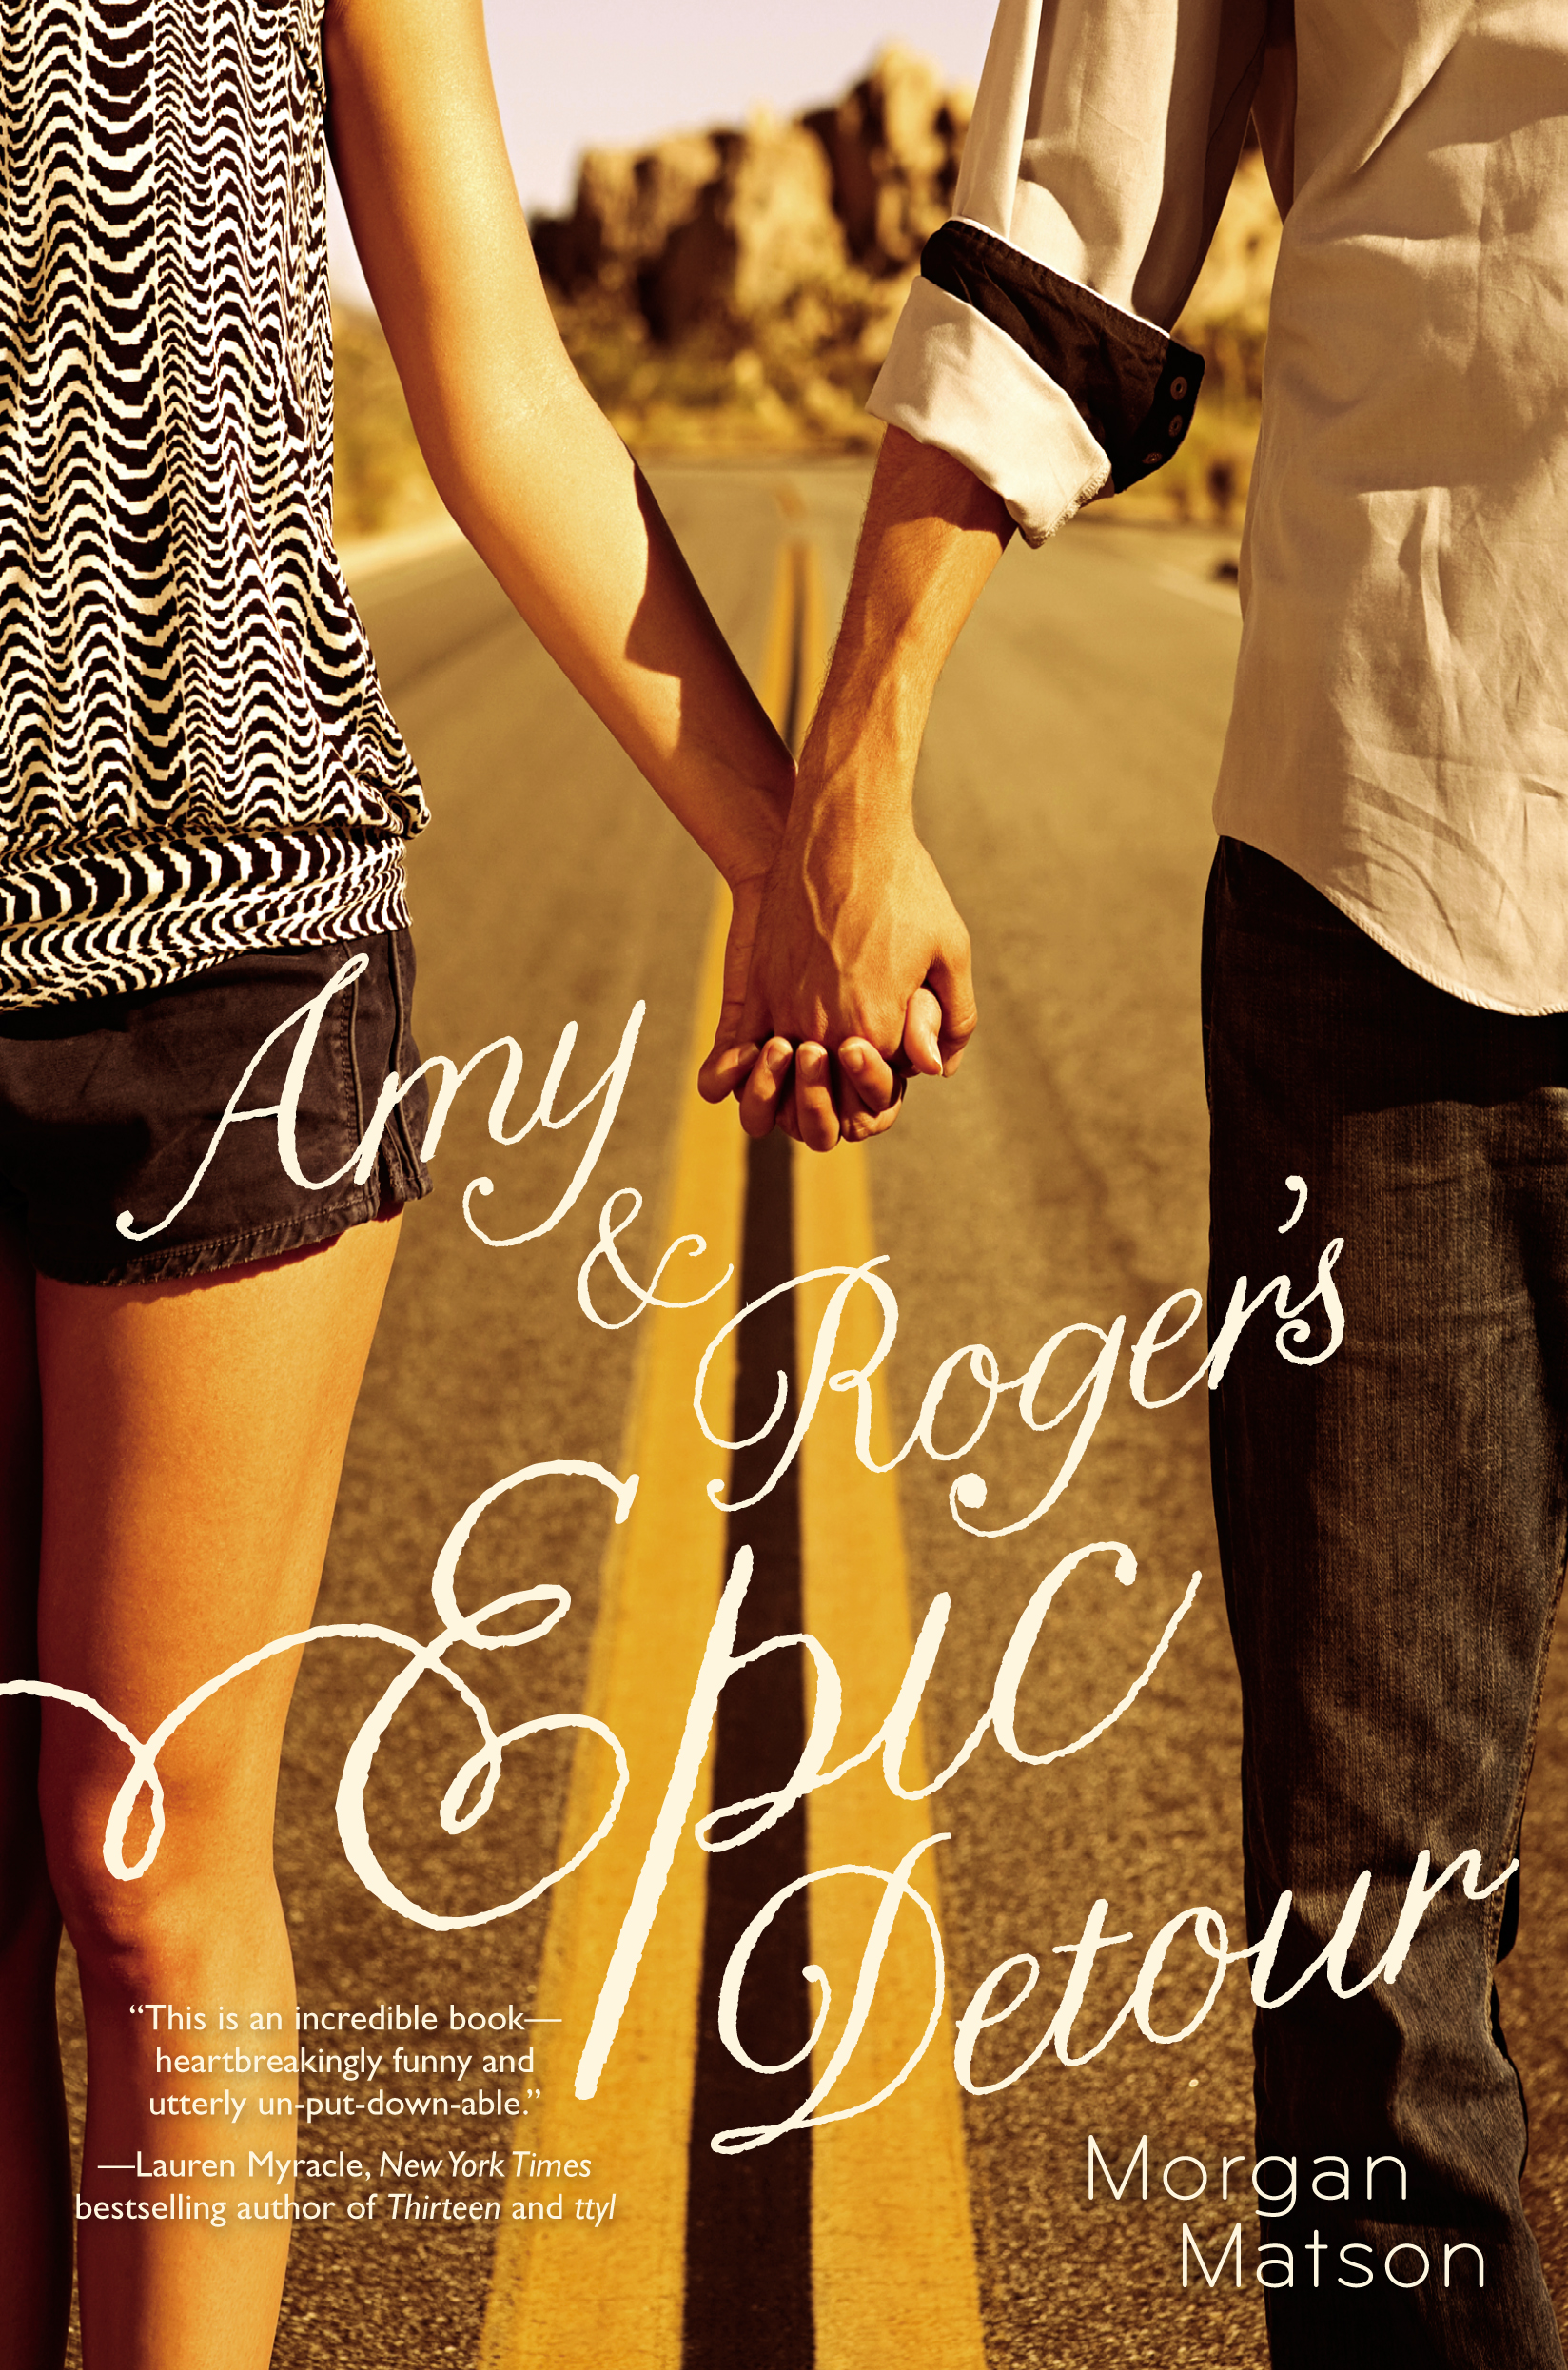 Amy & Roger’s Epic Detour cover image